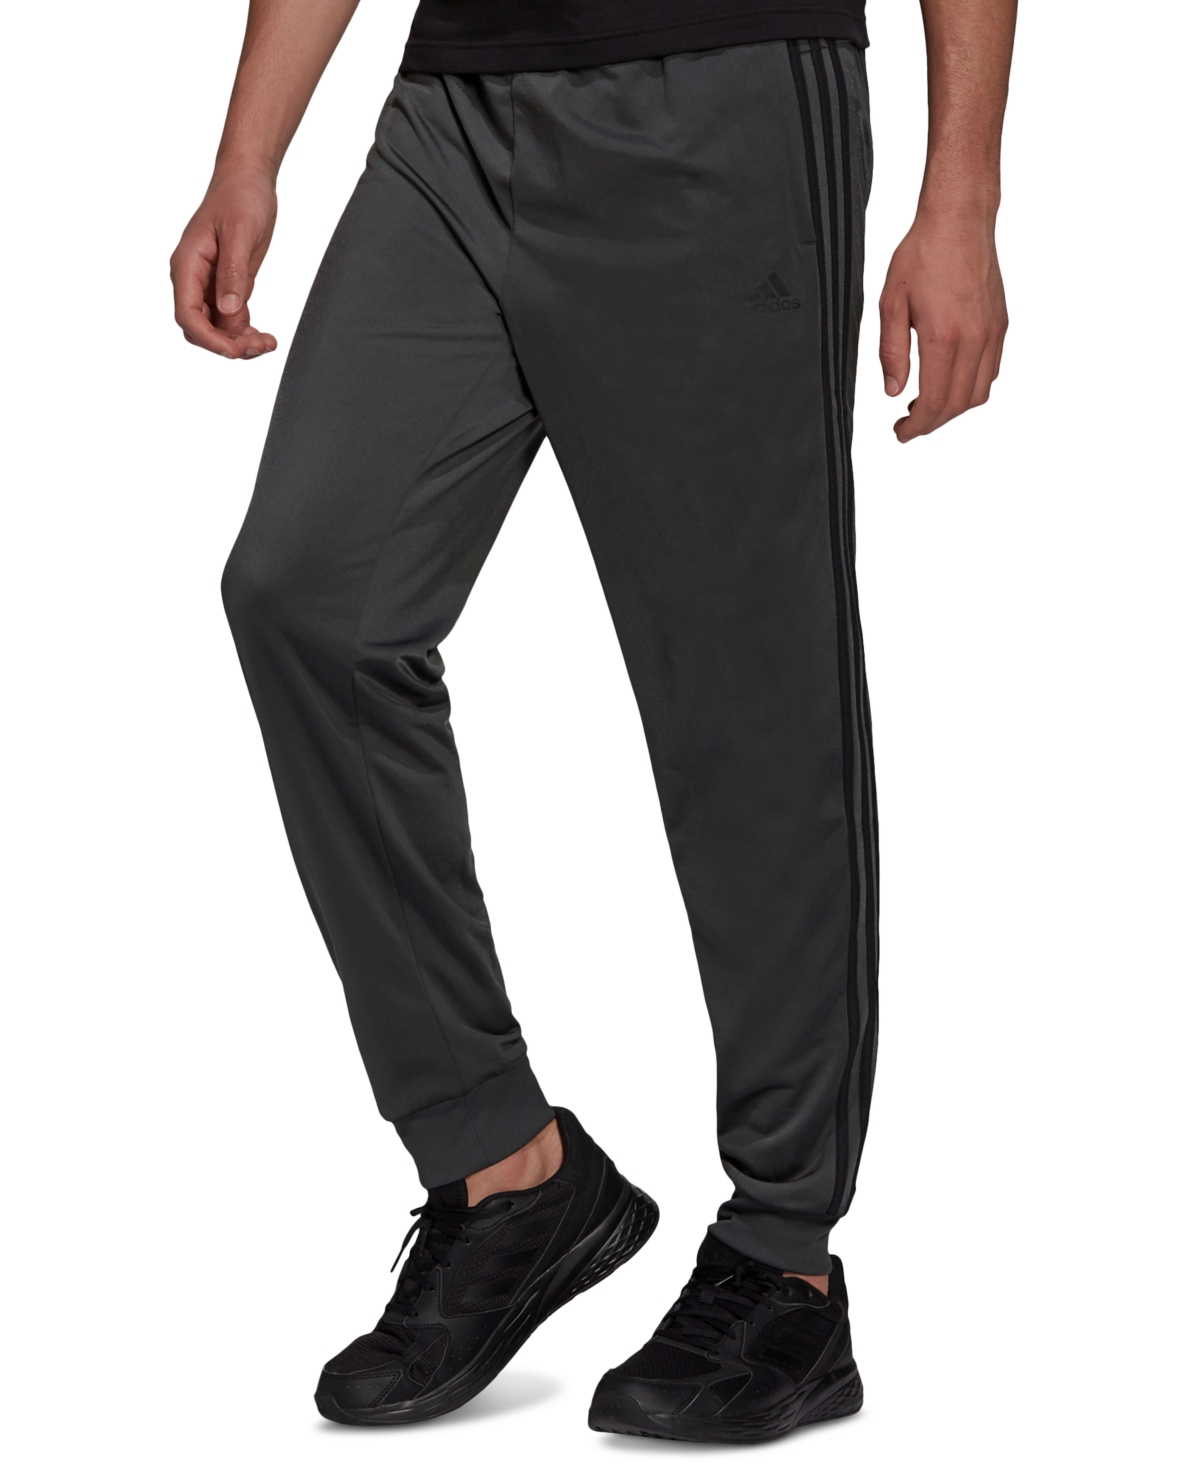 Adidas Originals Men's Tricot Jogger Pants In Dark Grey Heather,black